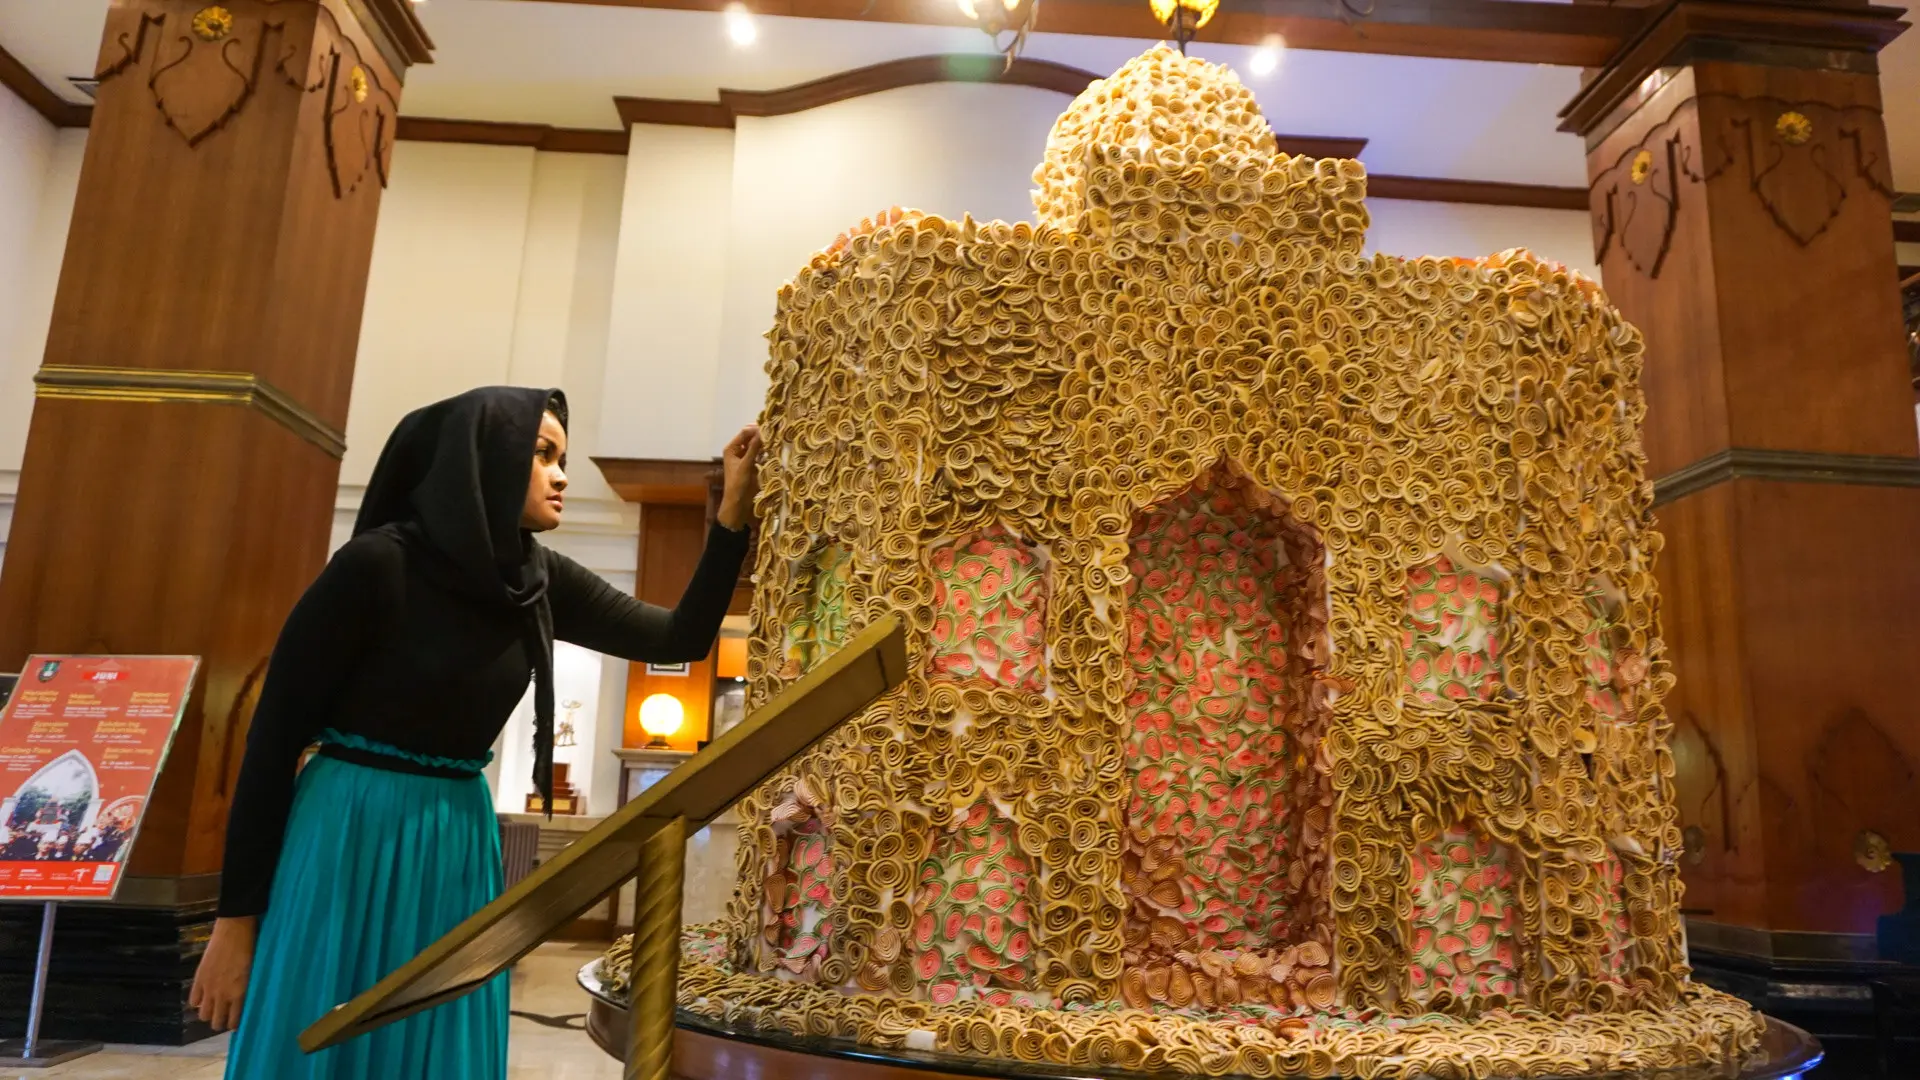 Dibutuhkan ribuan kue kuping gajah untuk membuat 'masjid' satu ini. (Liputan6.com/Fajar Abrori).